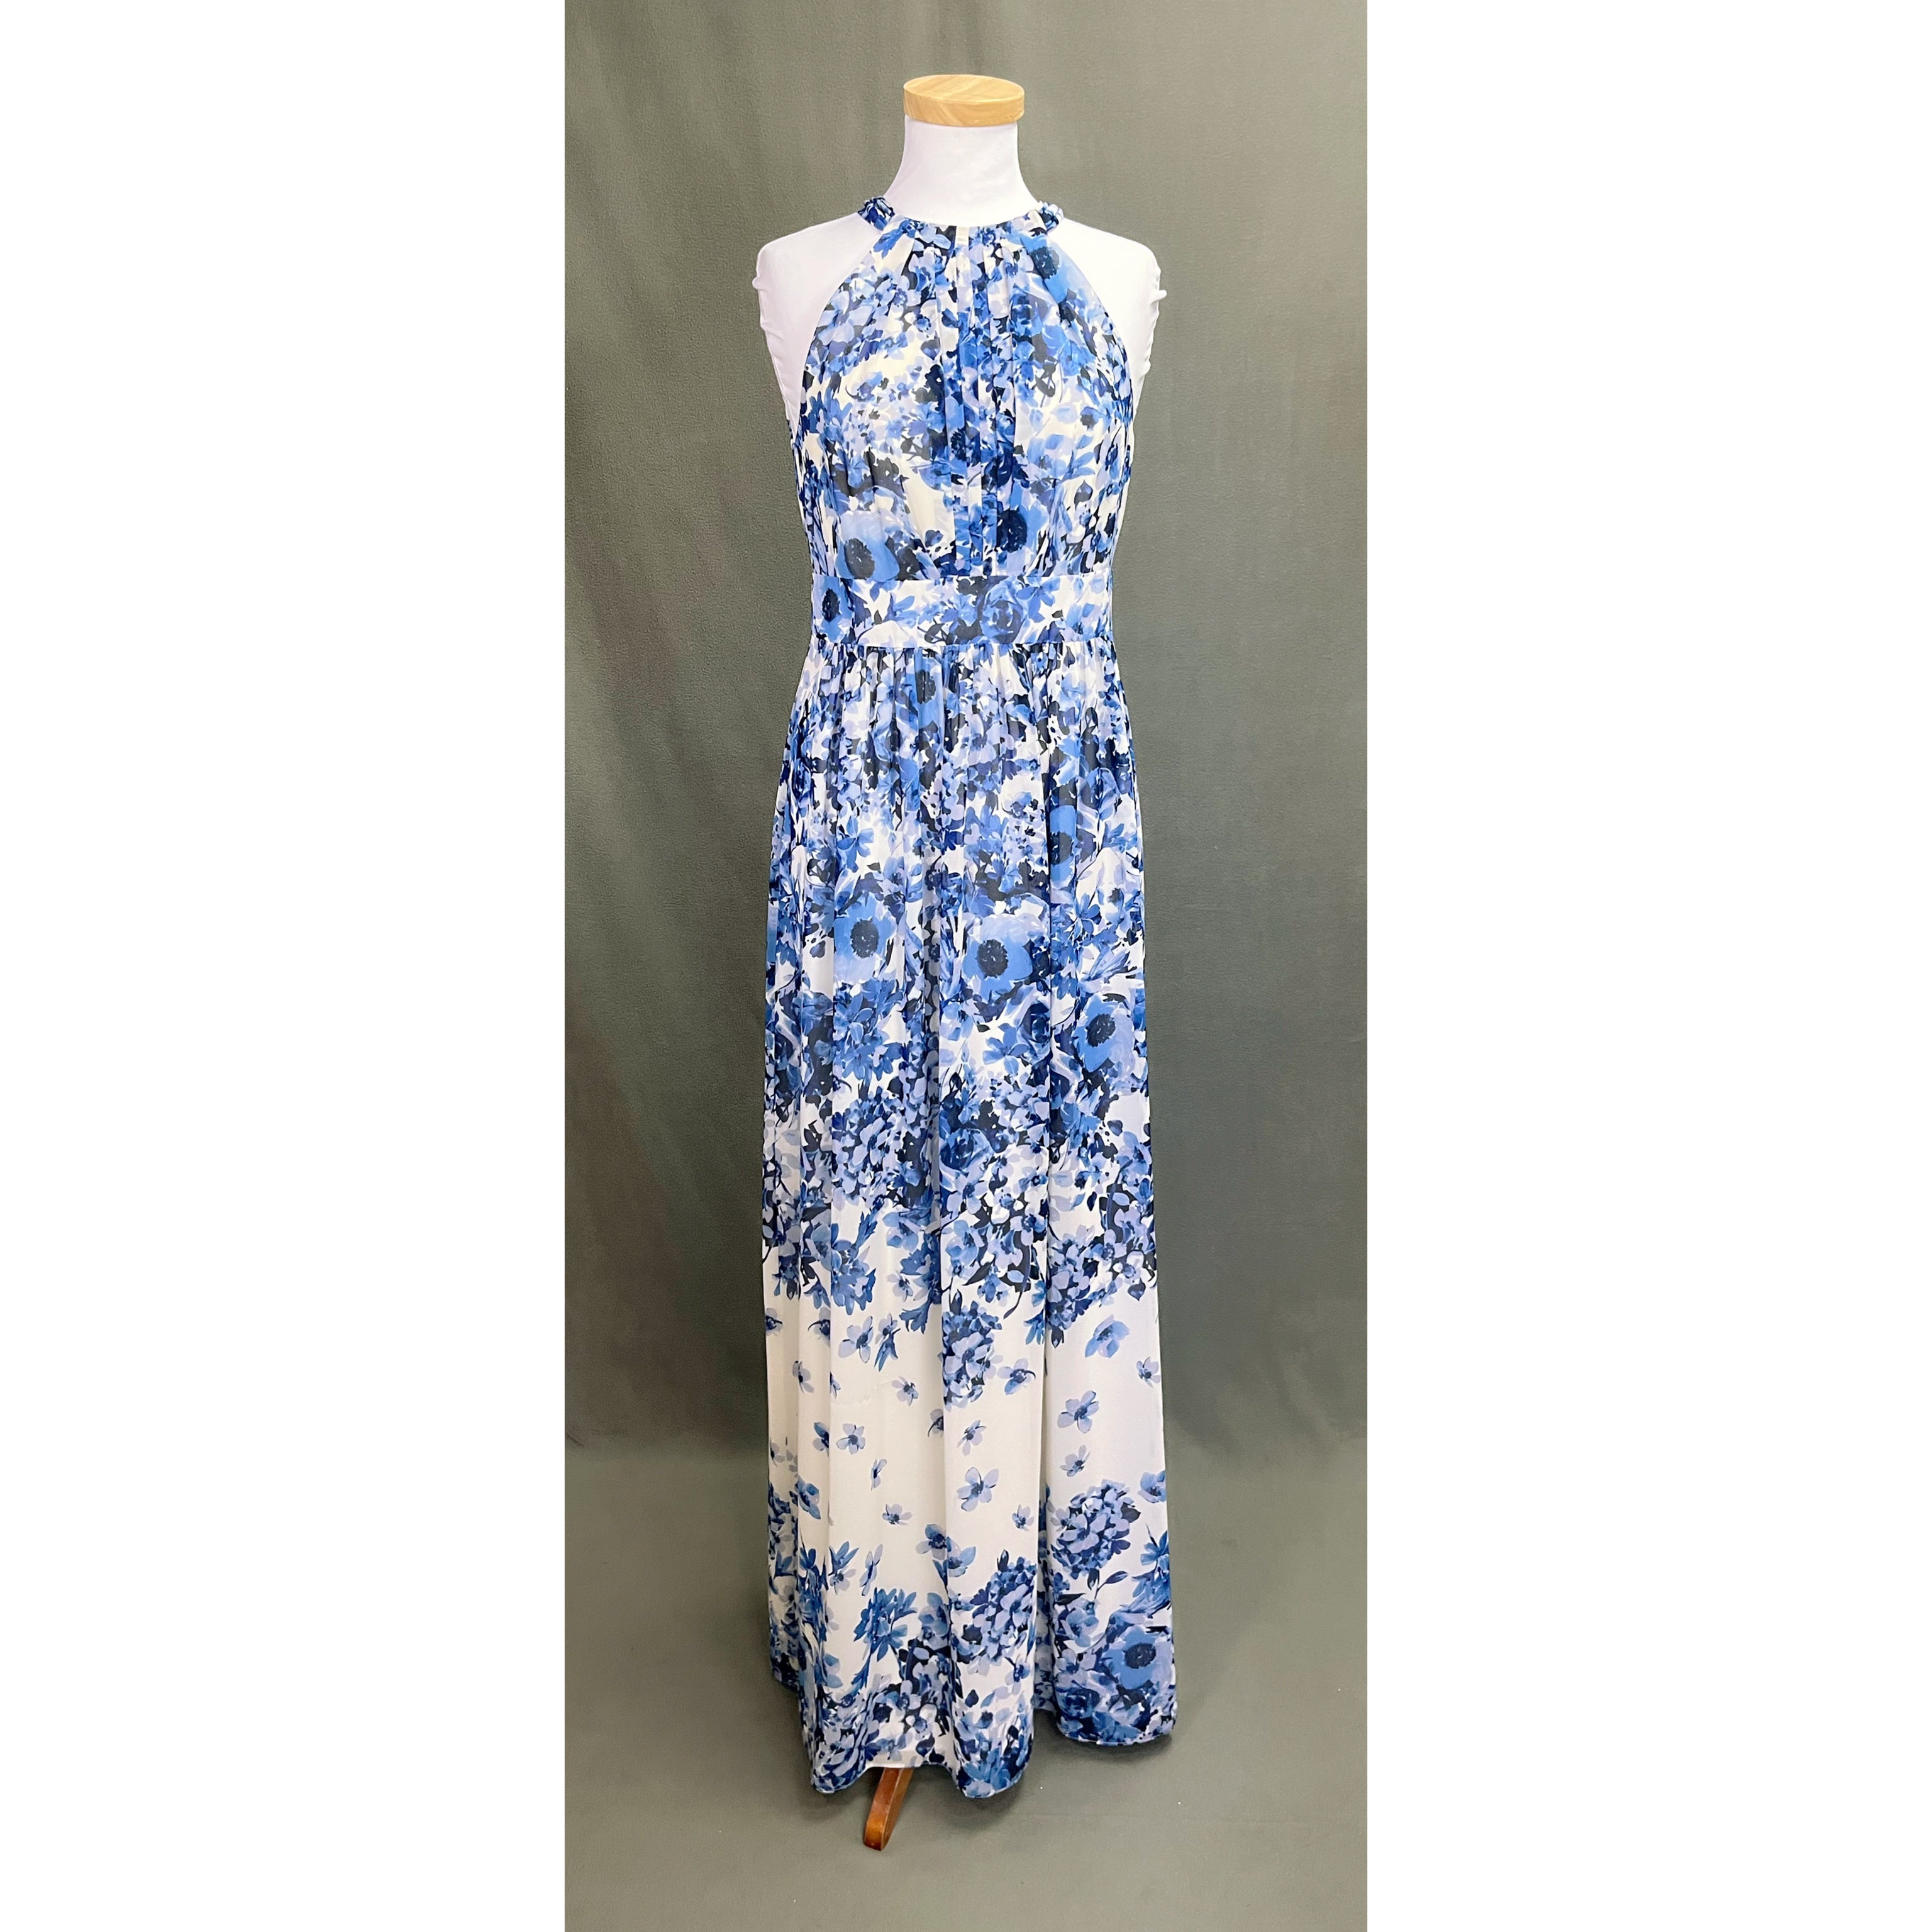 Eliza J. blue floral dress, size 8